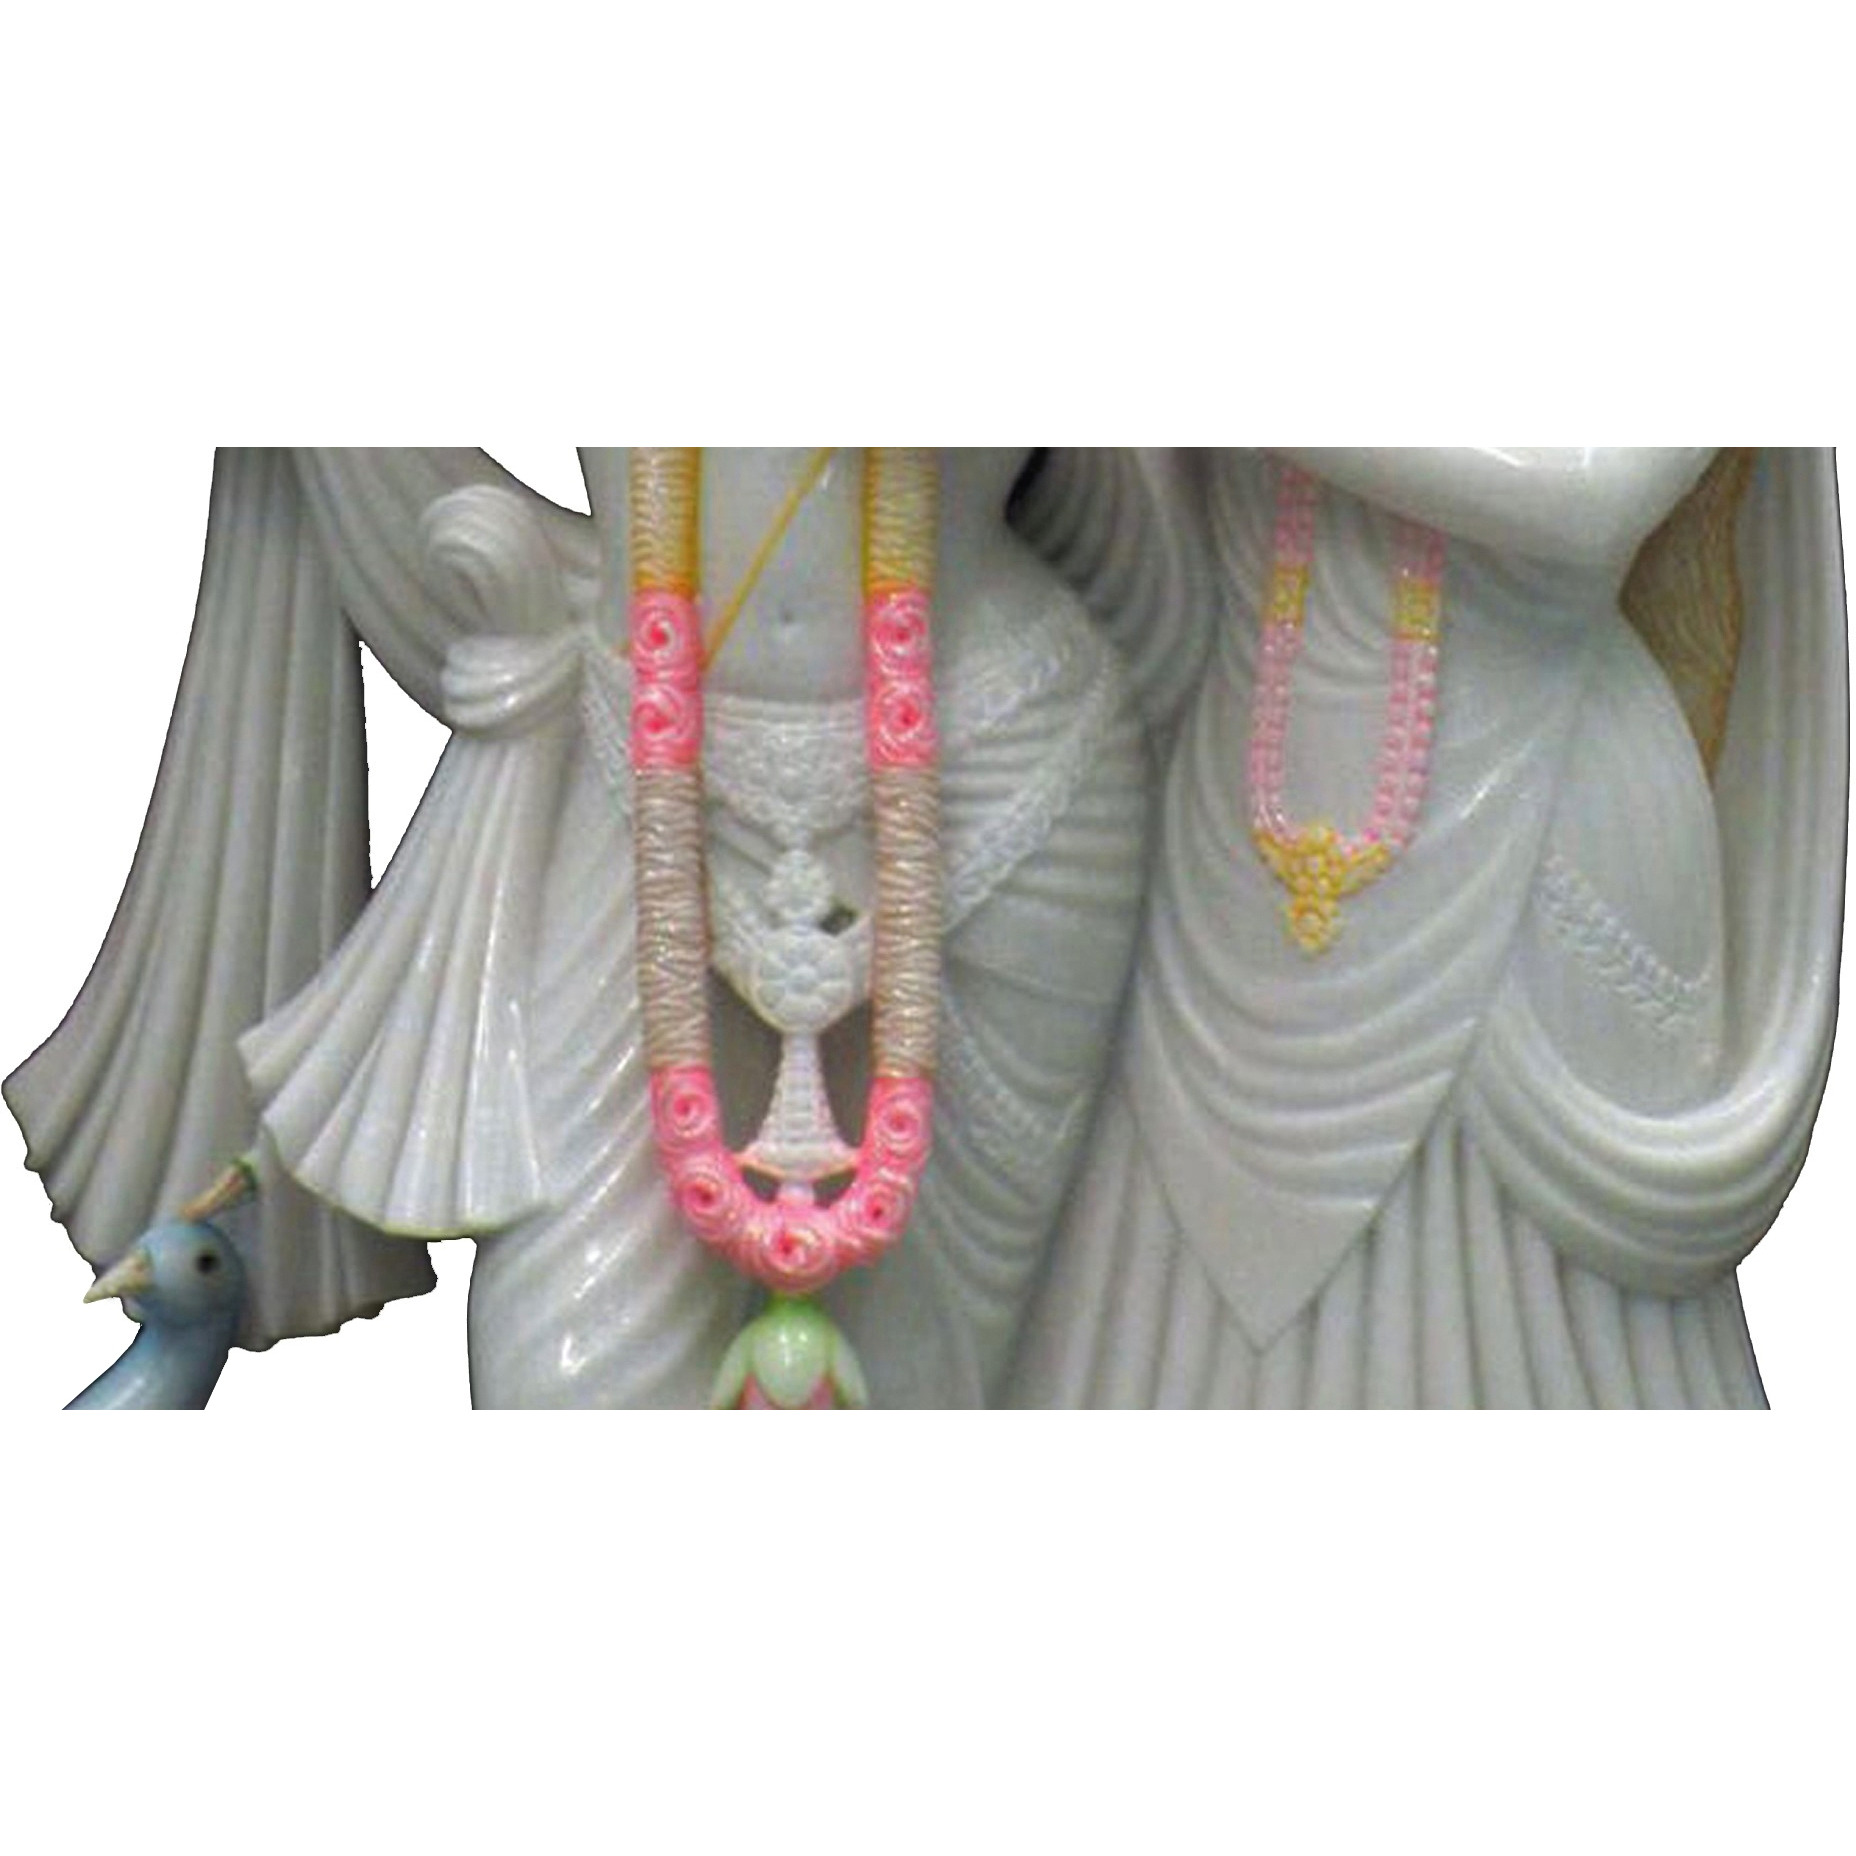 Marble Radha Krishna Statue, White Marble Radha Krishna Statues Beautiful Hand Carved Mandir, Pooja Room Decor Statues